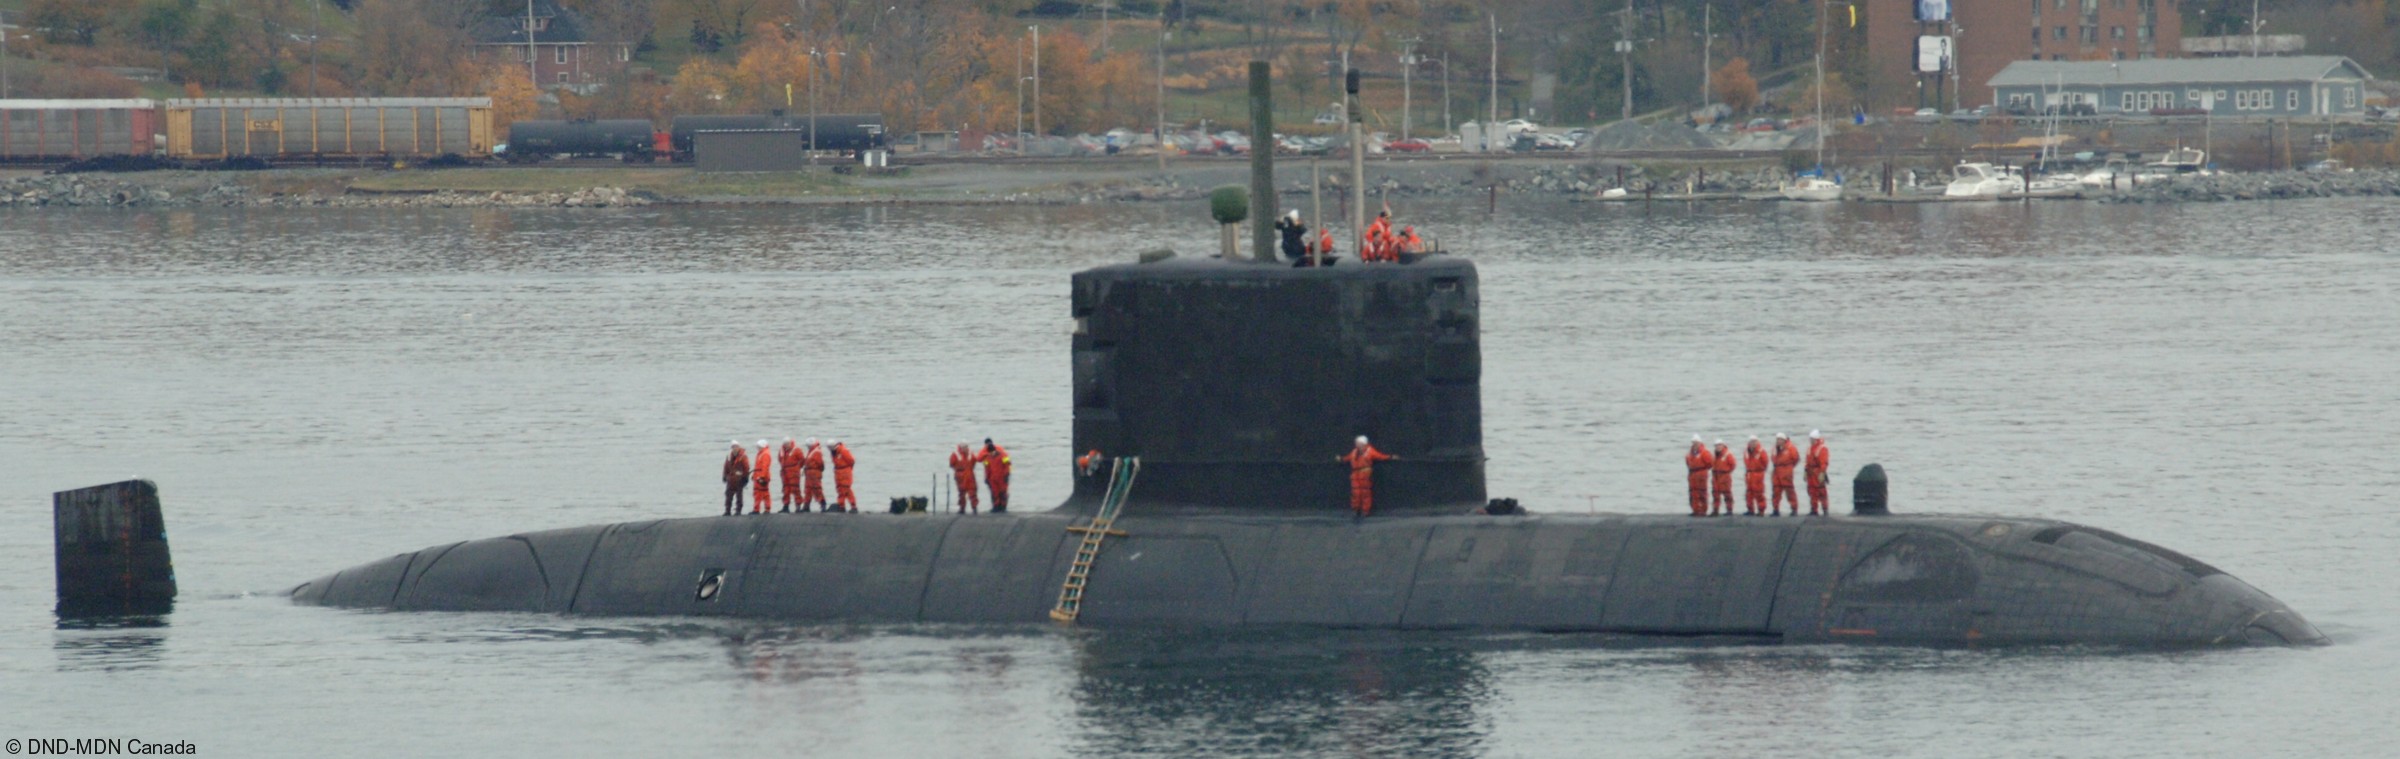 victoria class patrol submarine ssk hunter killer upholder royal canadian navy hmcs ncsm 06c